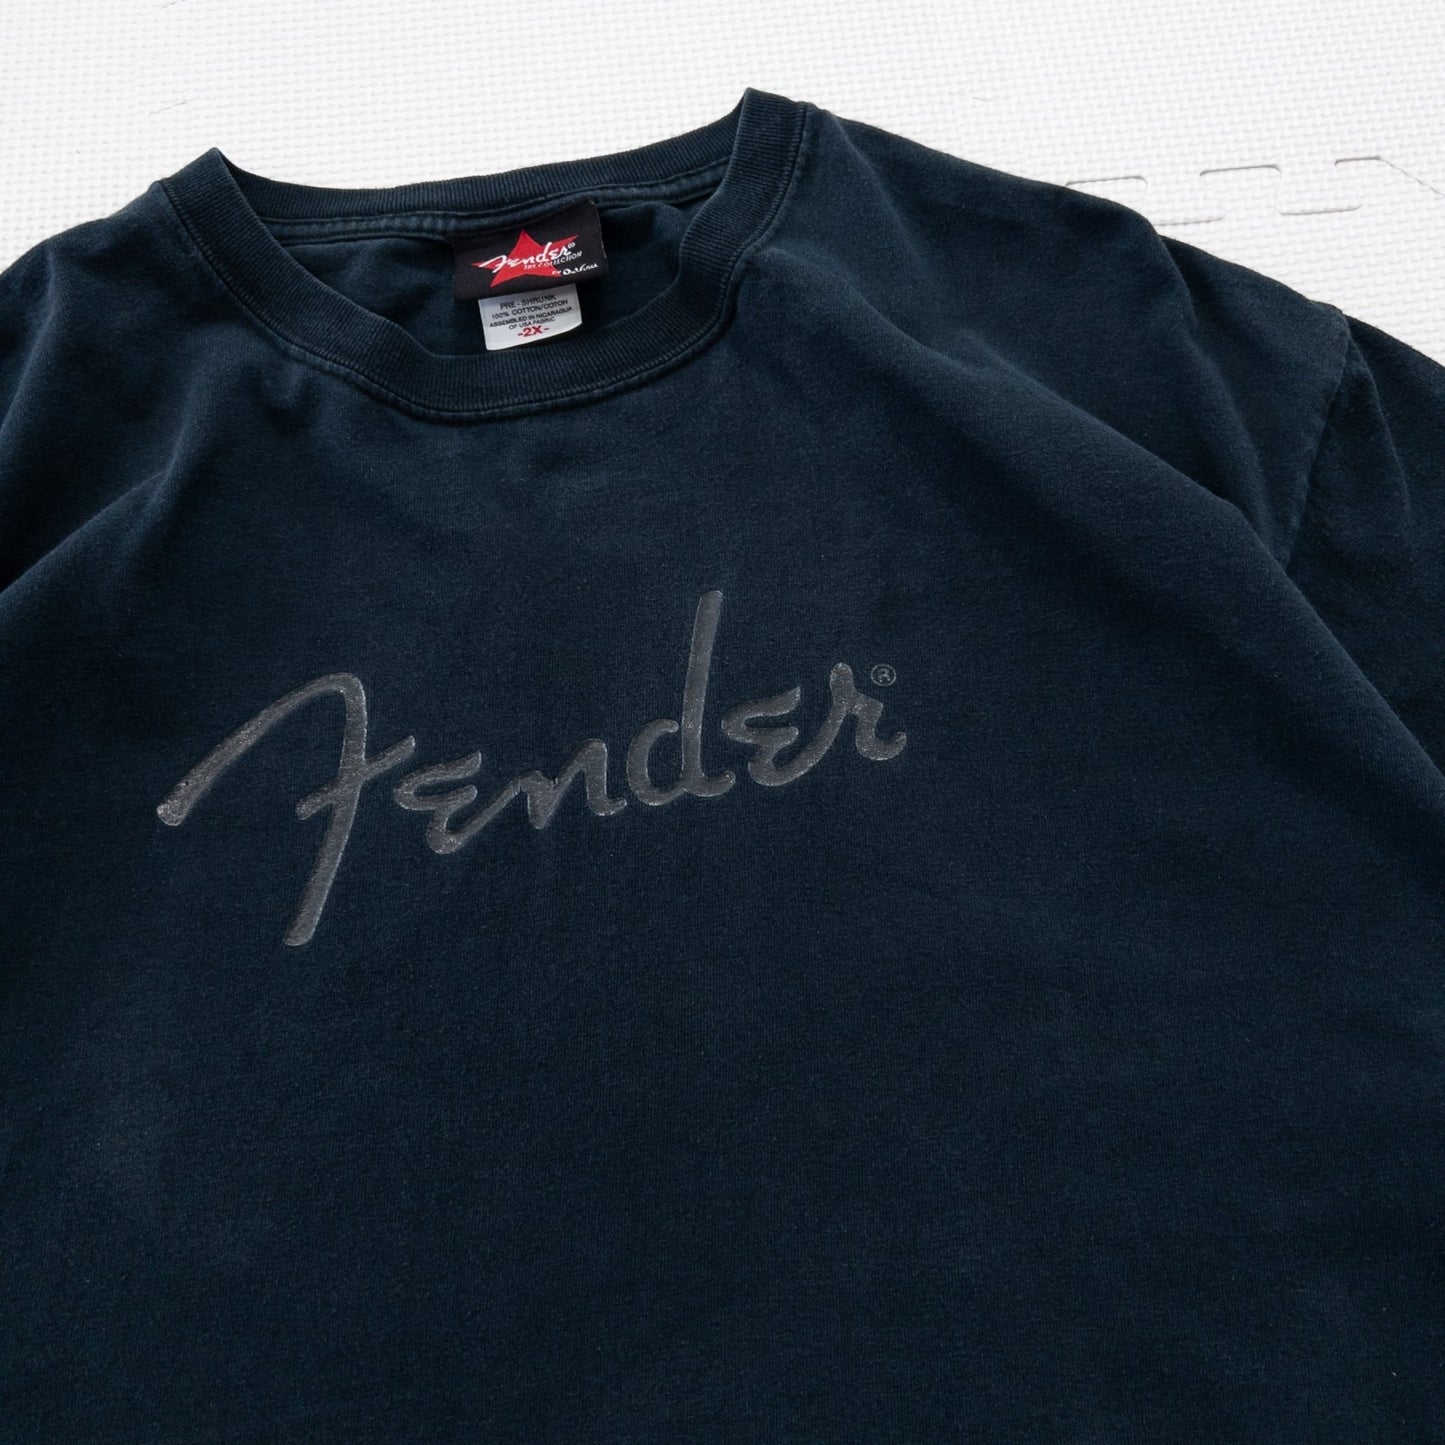 00s ”Fender” XXL